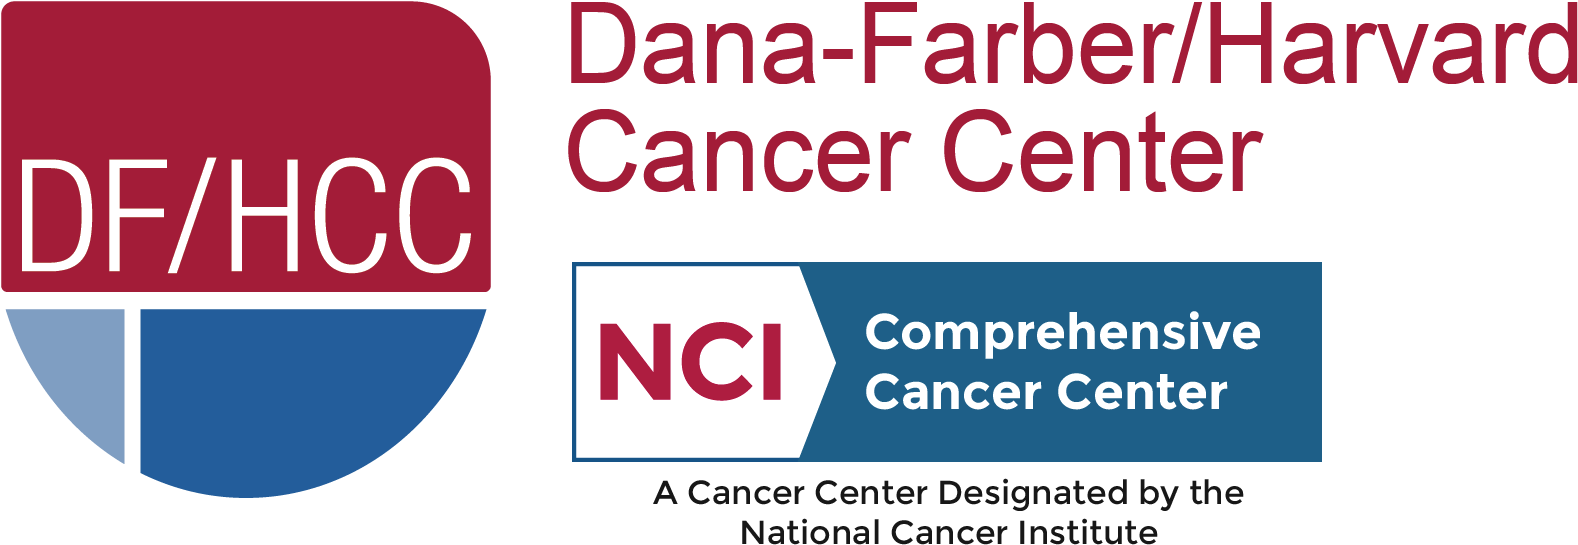 Company Logo - Dana Farber Harvard Cancer Center (1588x559)